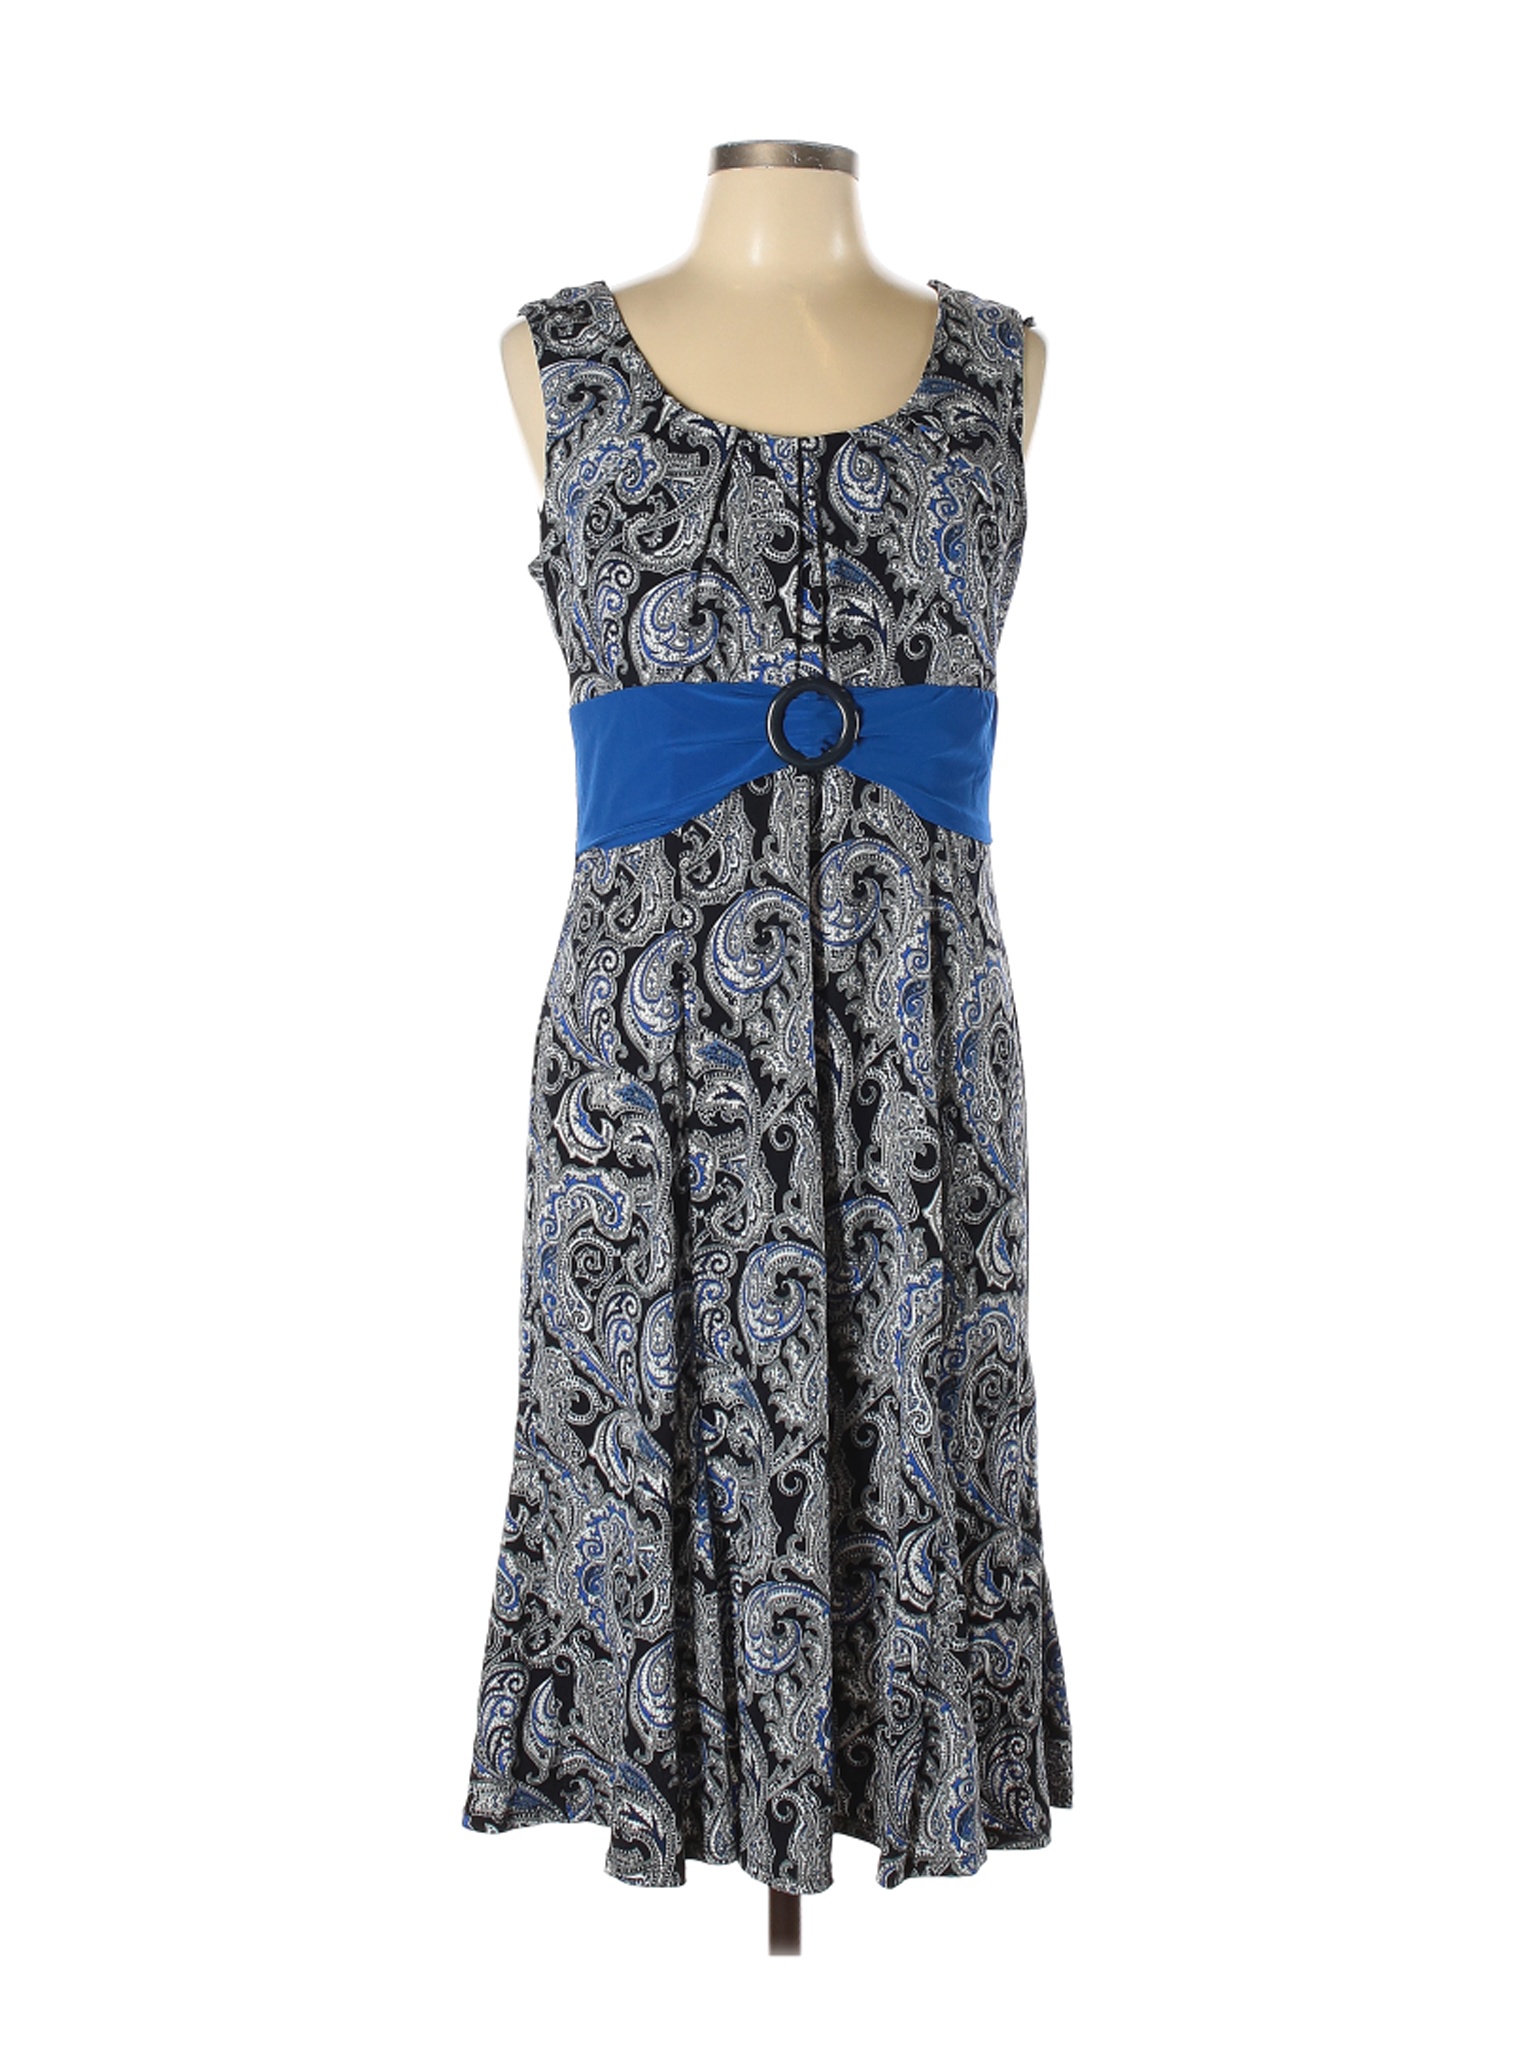 Perceptions Women Blue Casual Dress L | eBay